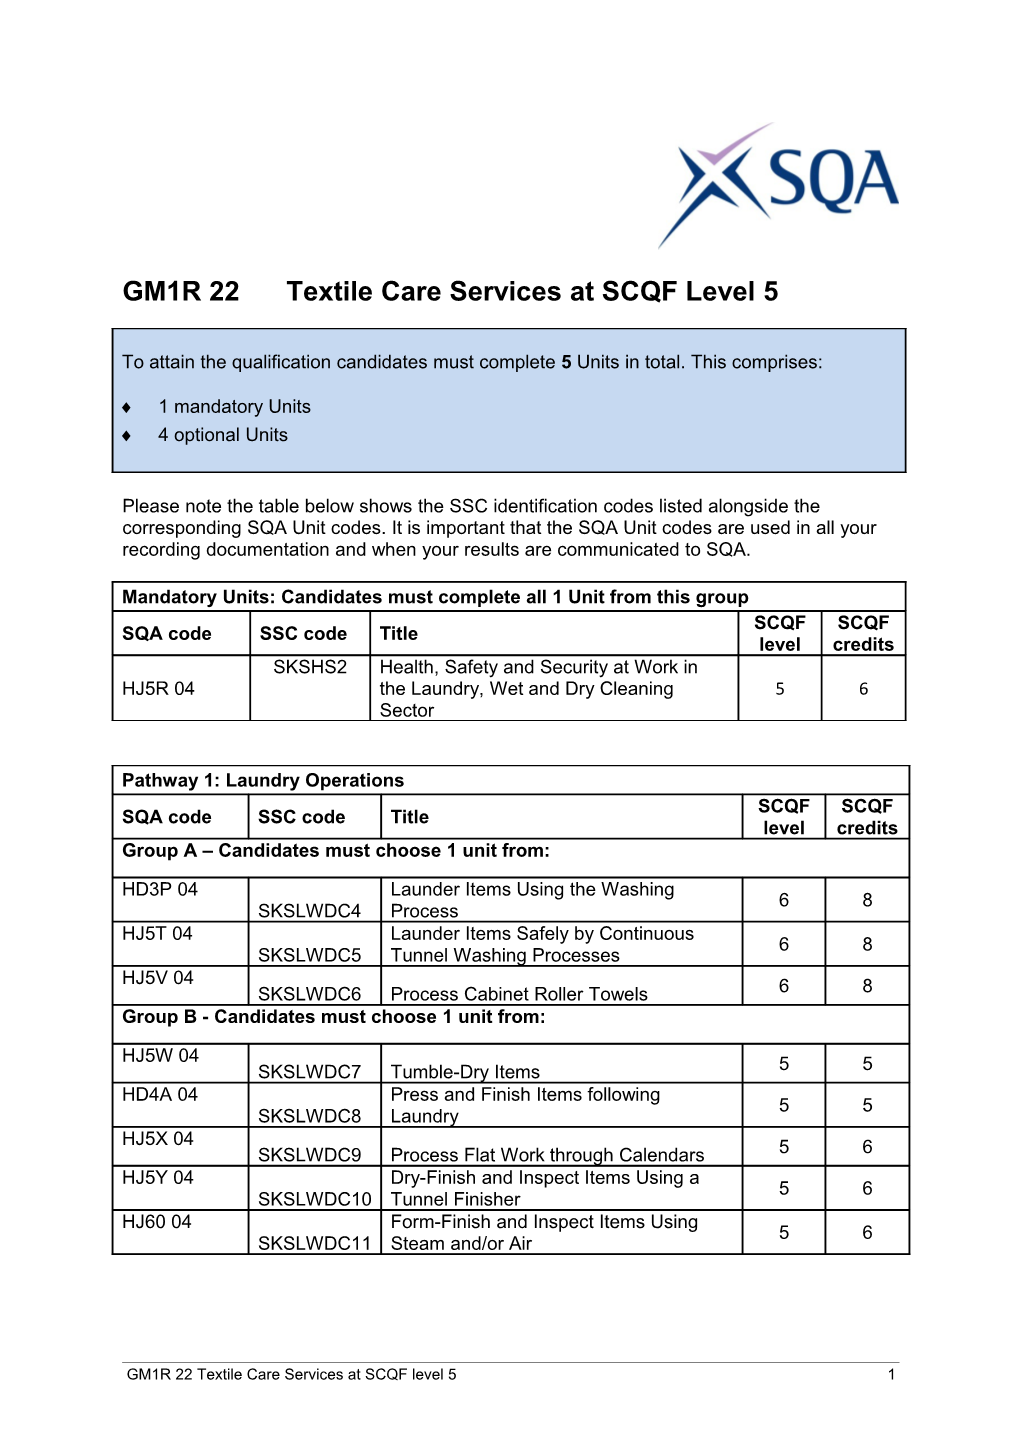 GM1R 22 Textile Care Services at SCQF Level 51